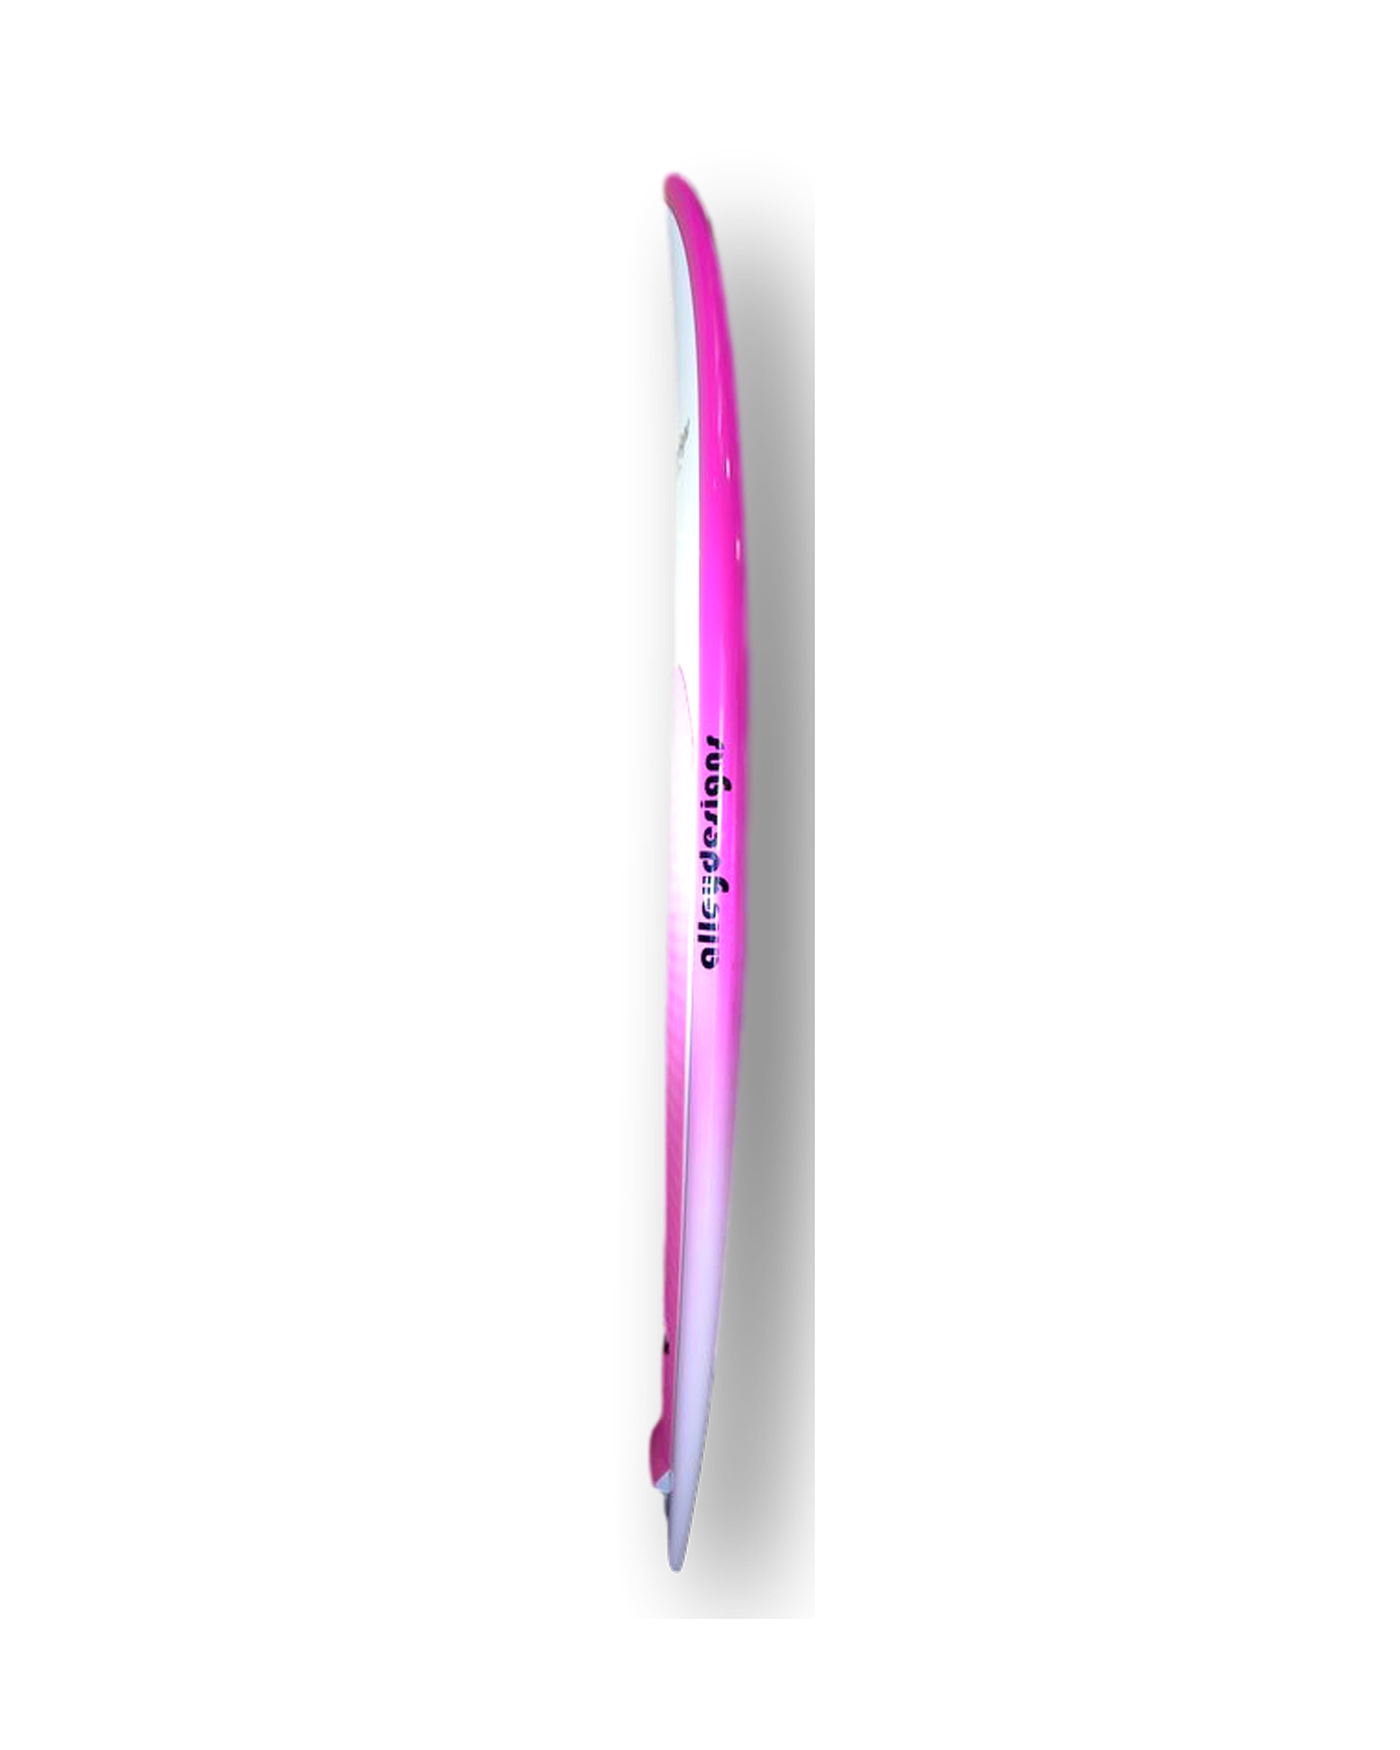 9'6" x 31" Pink & White Performance SUP Alleydesigns 9KG - Alleydesigns  Pty Ltd                                             ABN: 44165571264